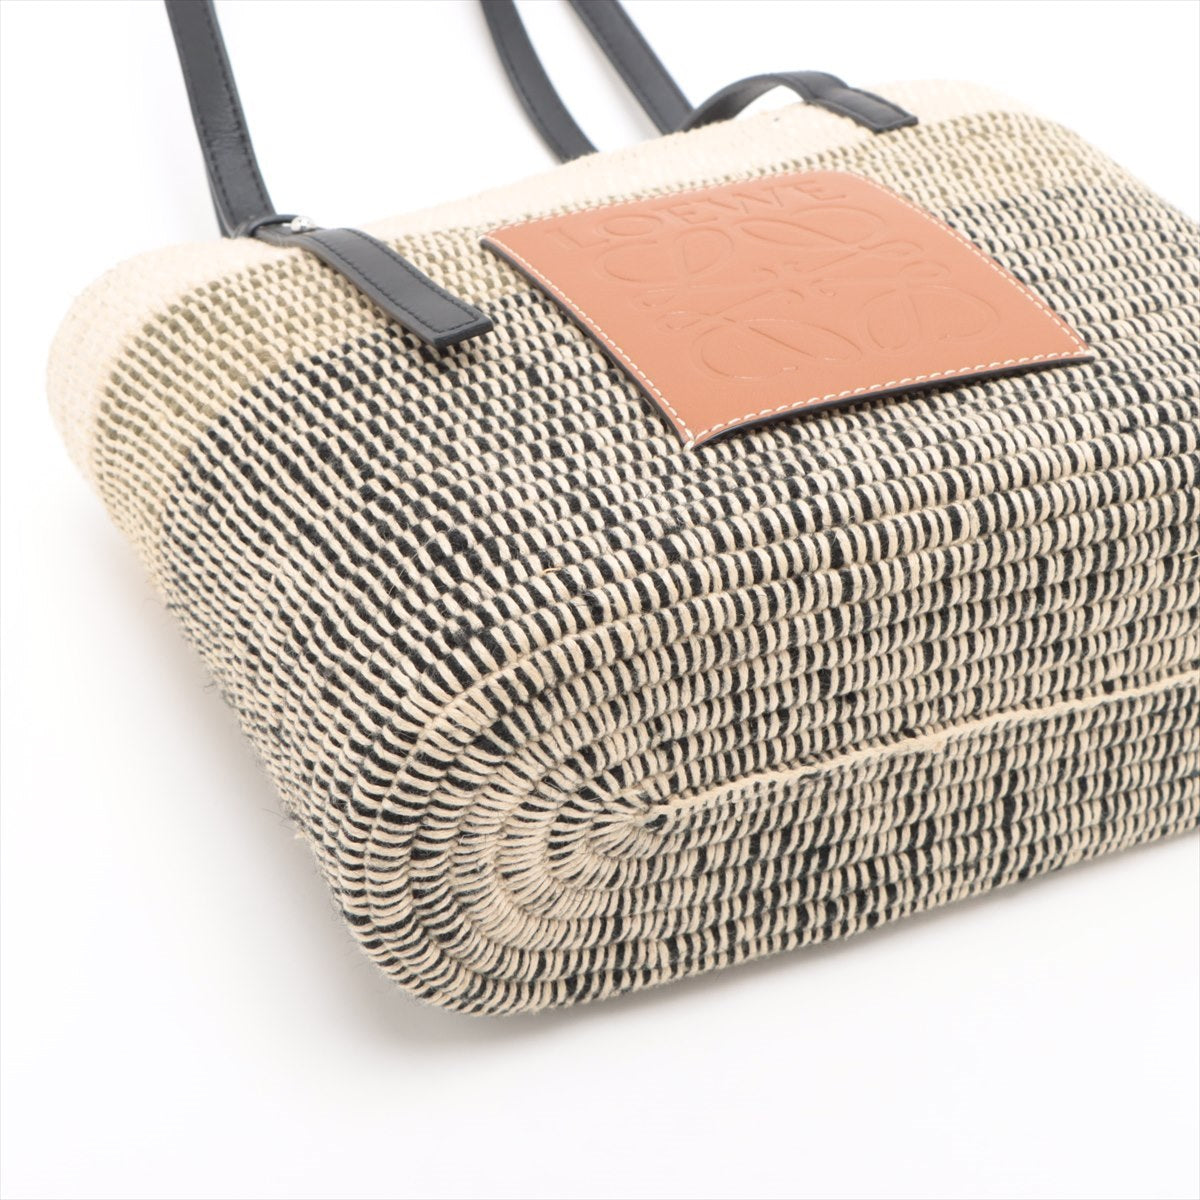 Loewe Anagram square basket small Wool & leather Straw bag black x beige